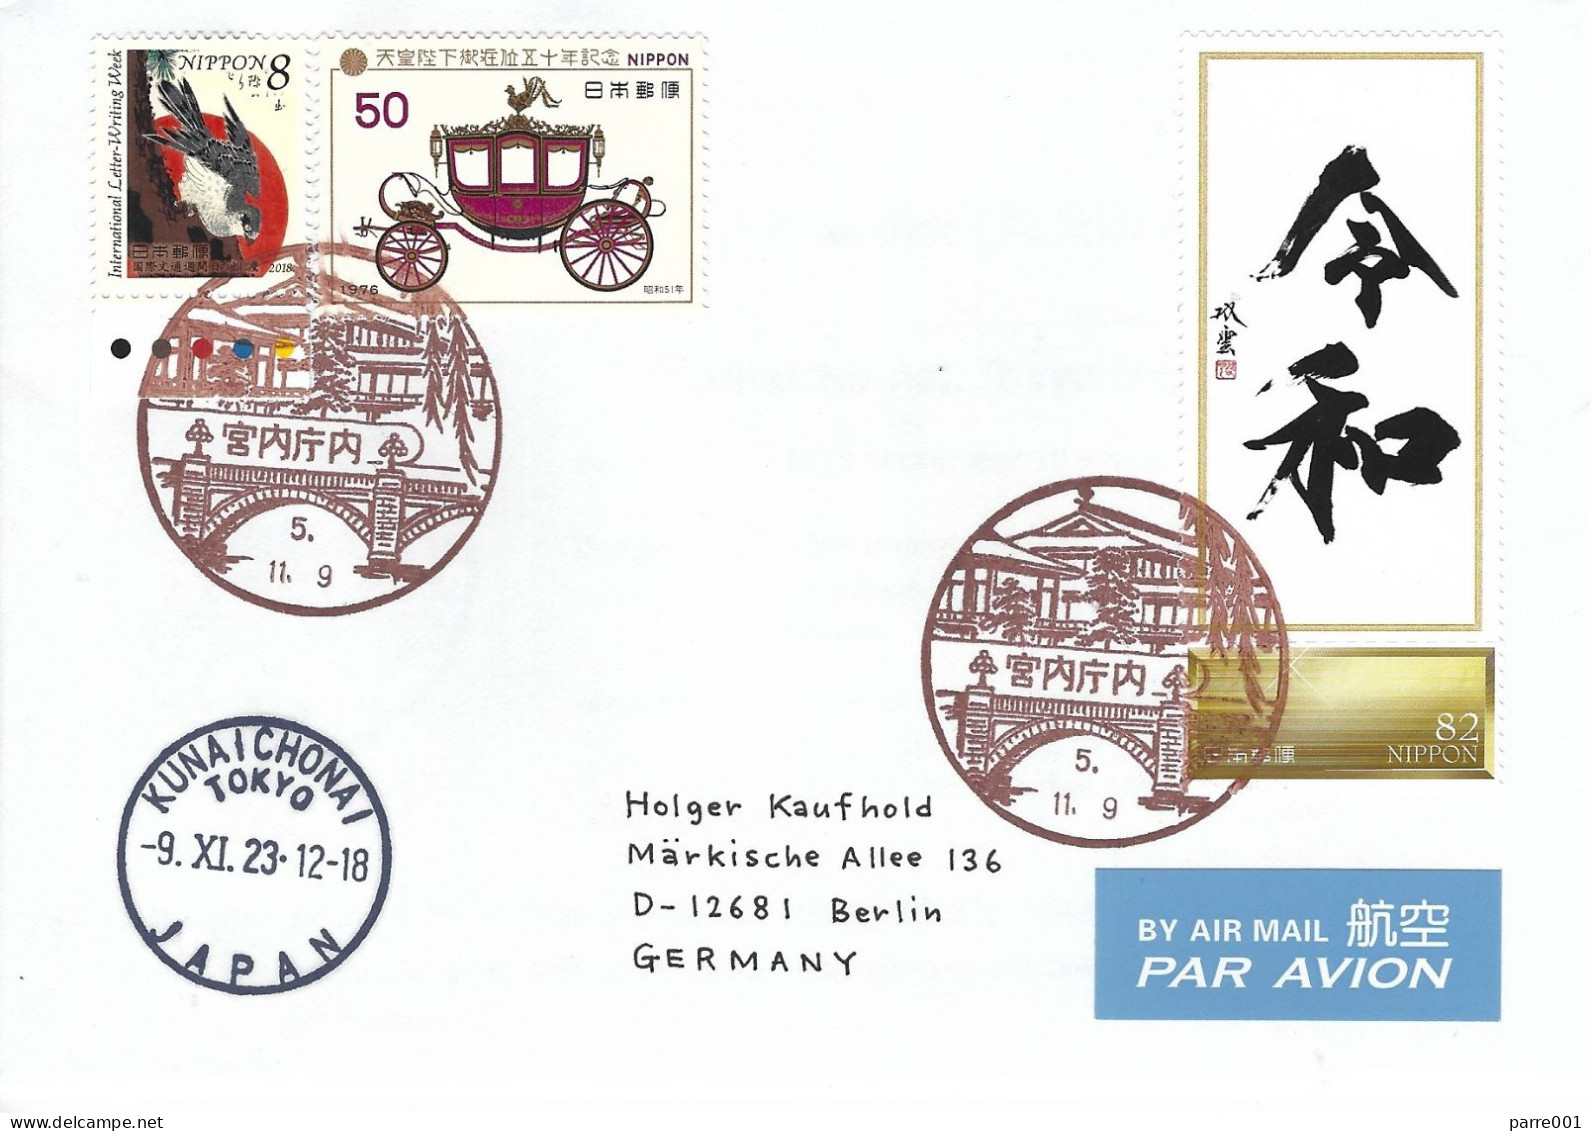 Japan 2023 Tokyo Falcon Reiwa Calligraphy Emperor Naruhito Imperial Palace Postmark Cover - Eagles & Birds Of Prey